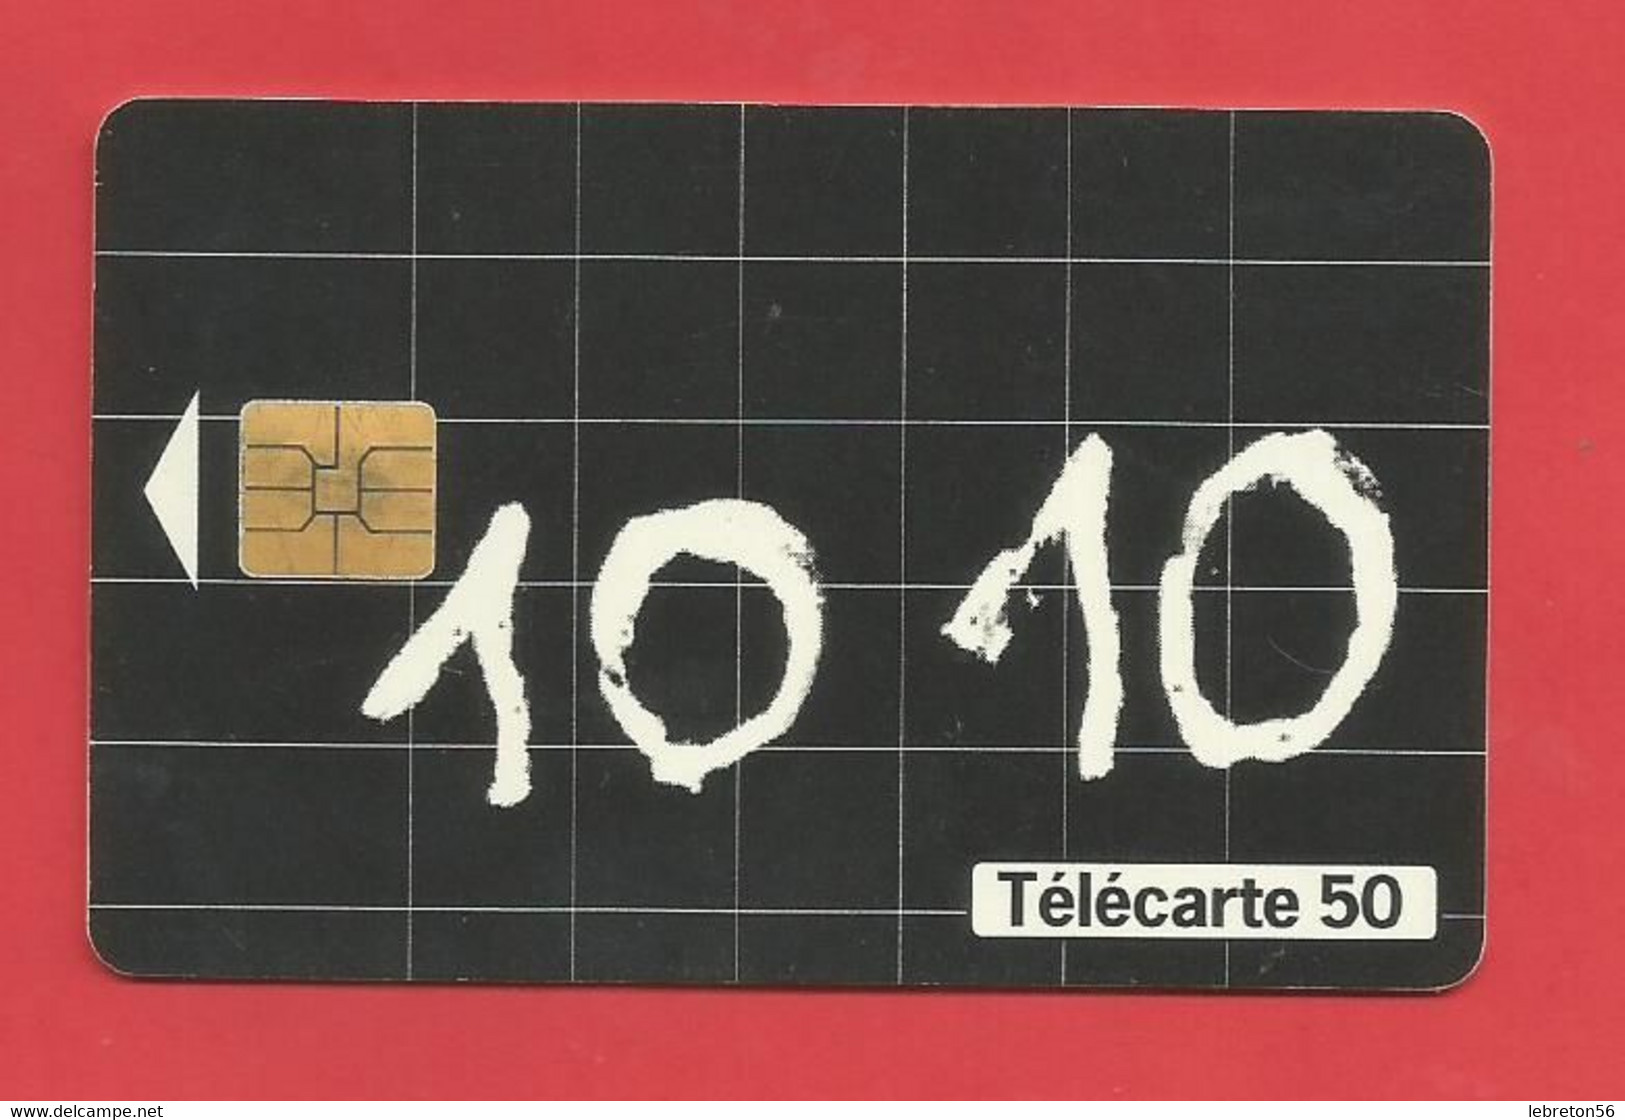 TELECARTE 50  U TIRAGE 1000 000 EX. France Télécom Appelez Le 10 10*---- X 2 Scan - Telekom-Betreiber